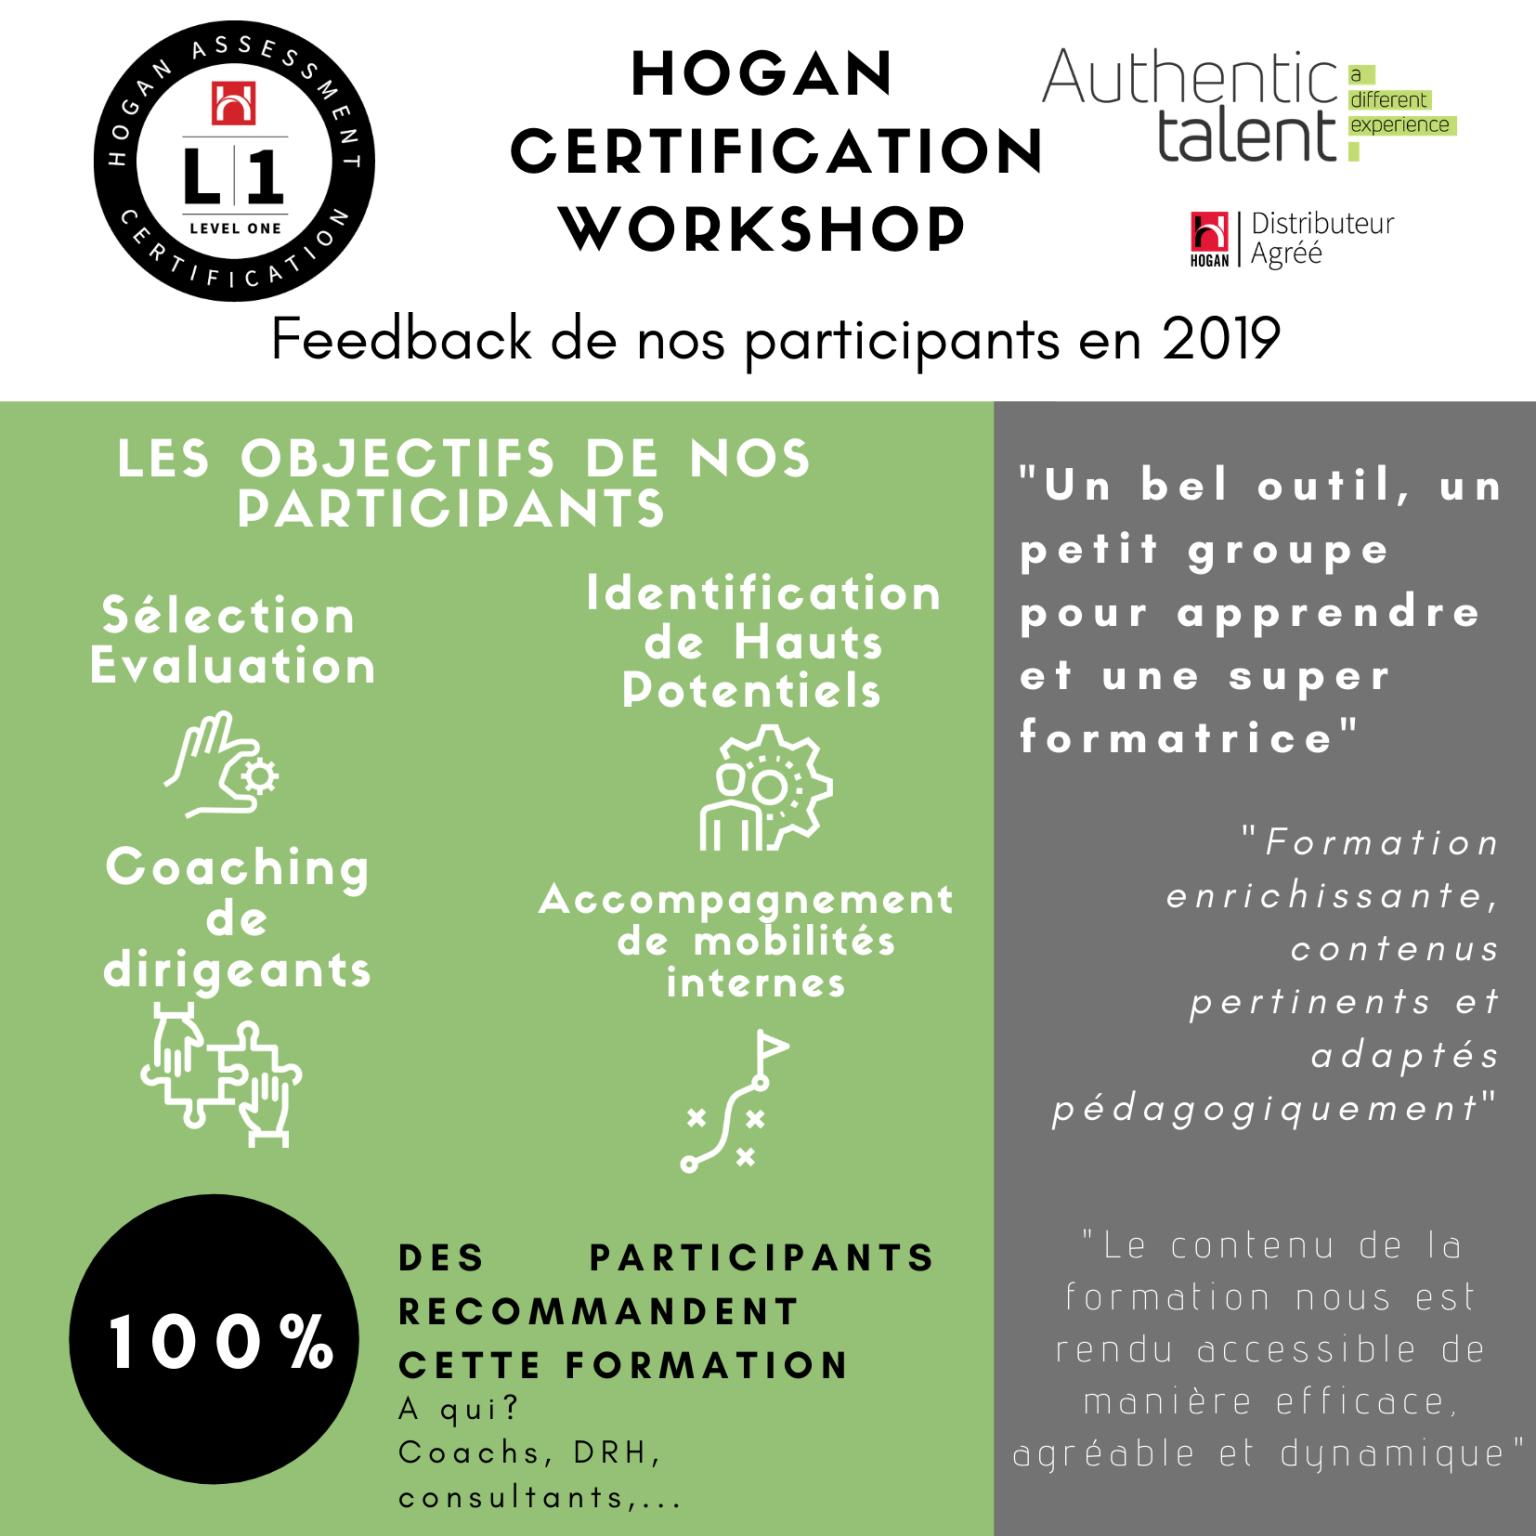 Hogan certification workshop - Feedback de nos participants - Évaluation